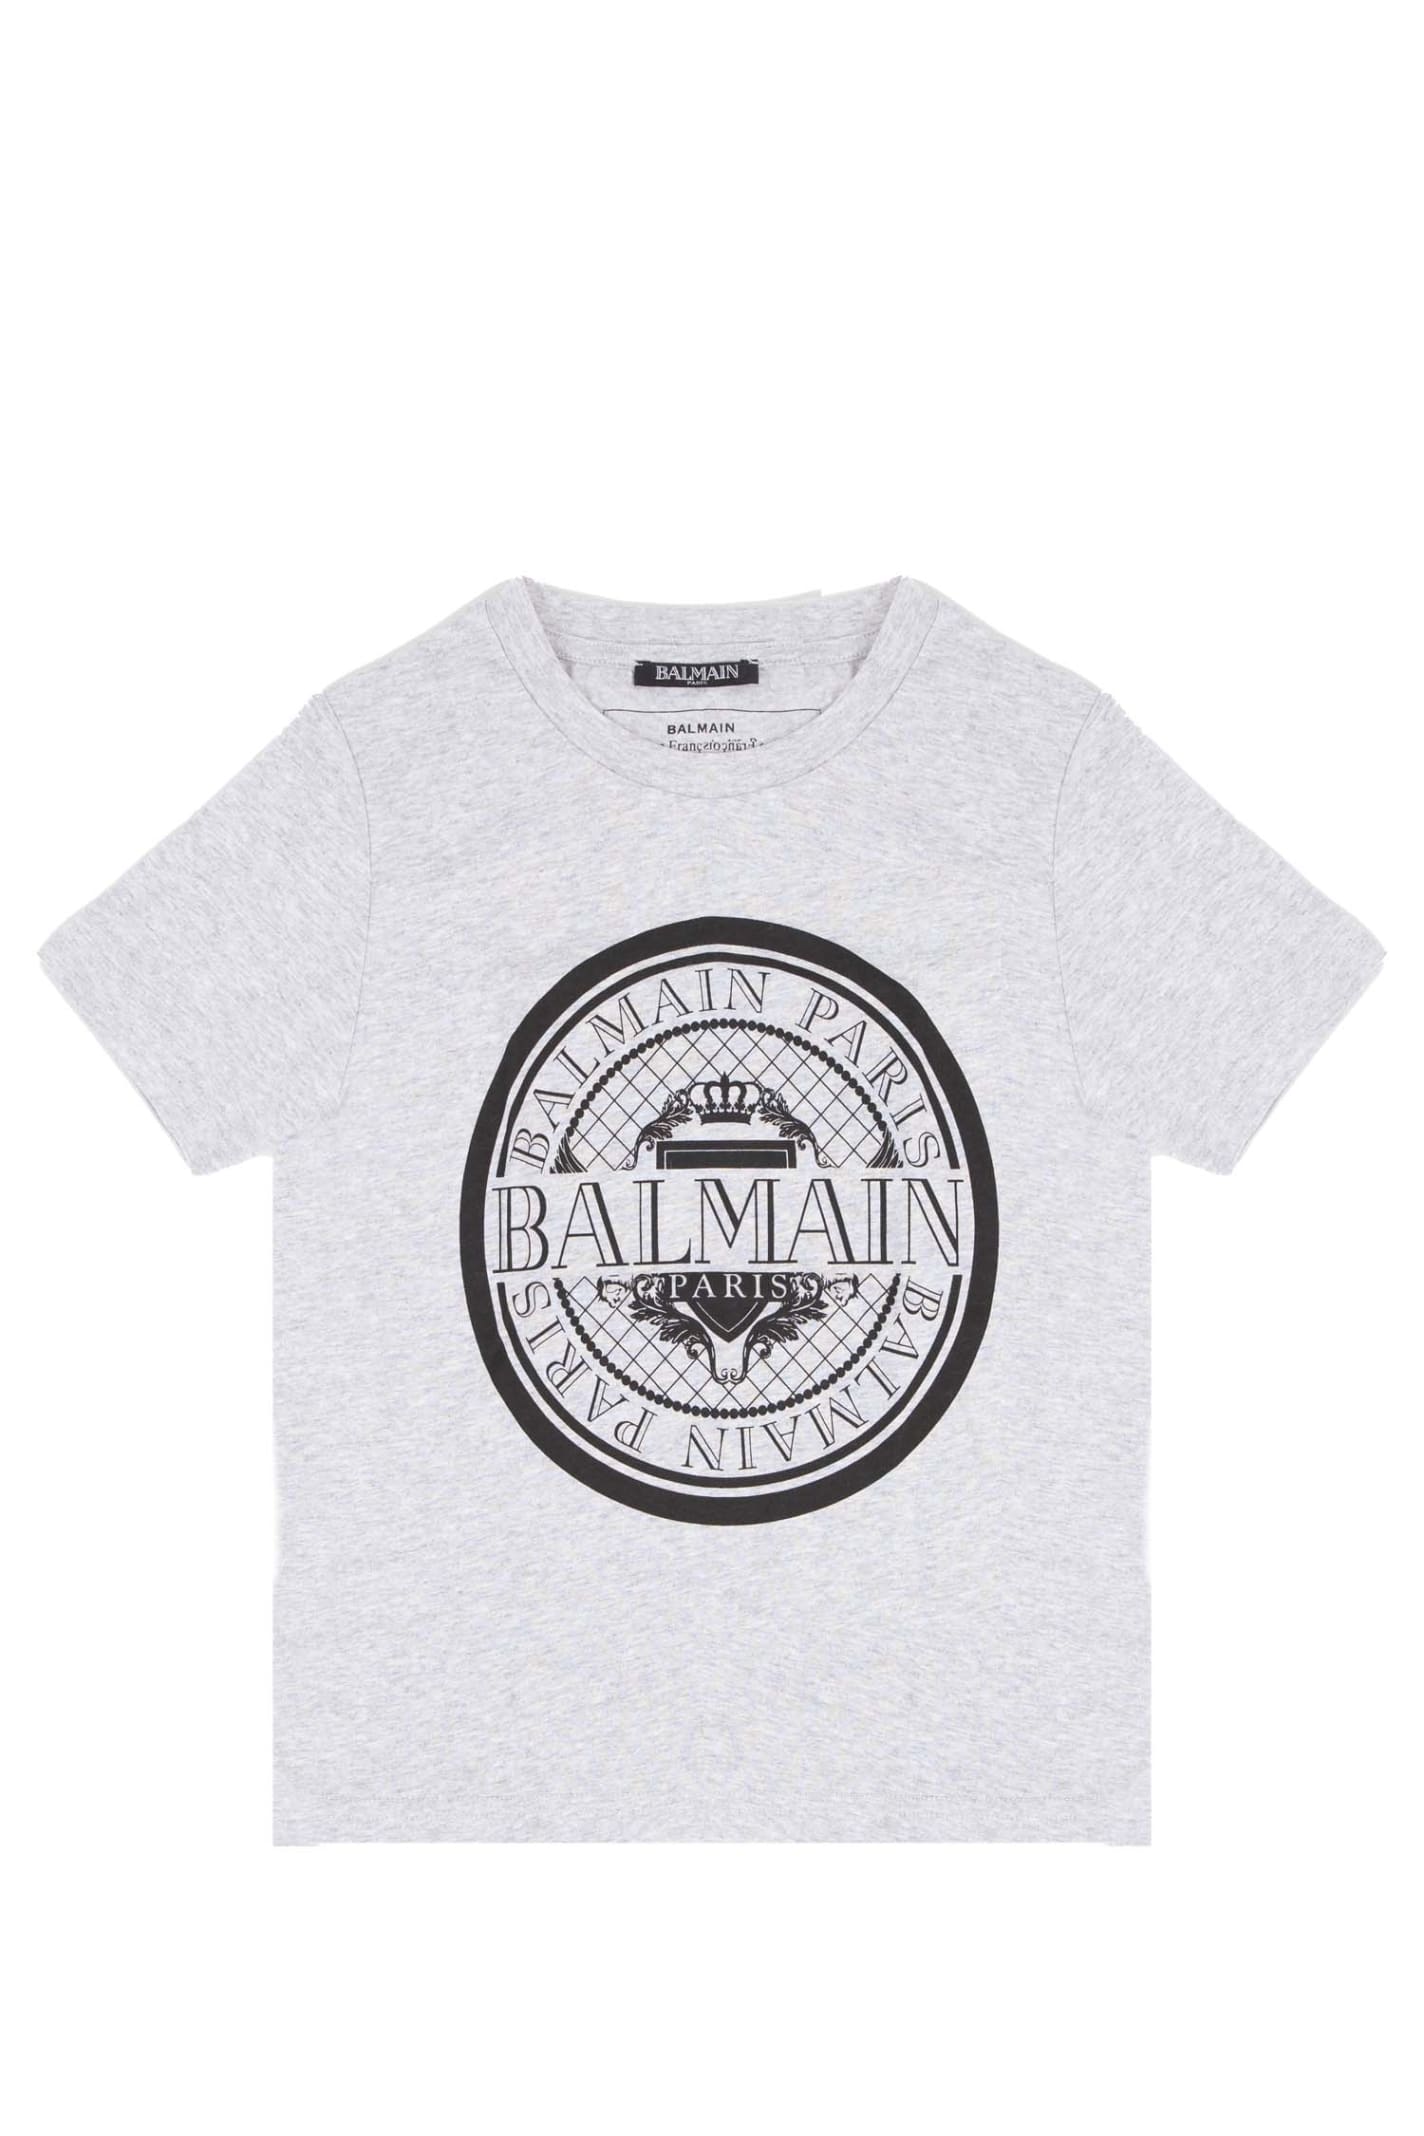 Balmain Kids' Cotton T-shirt In Grey